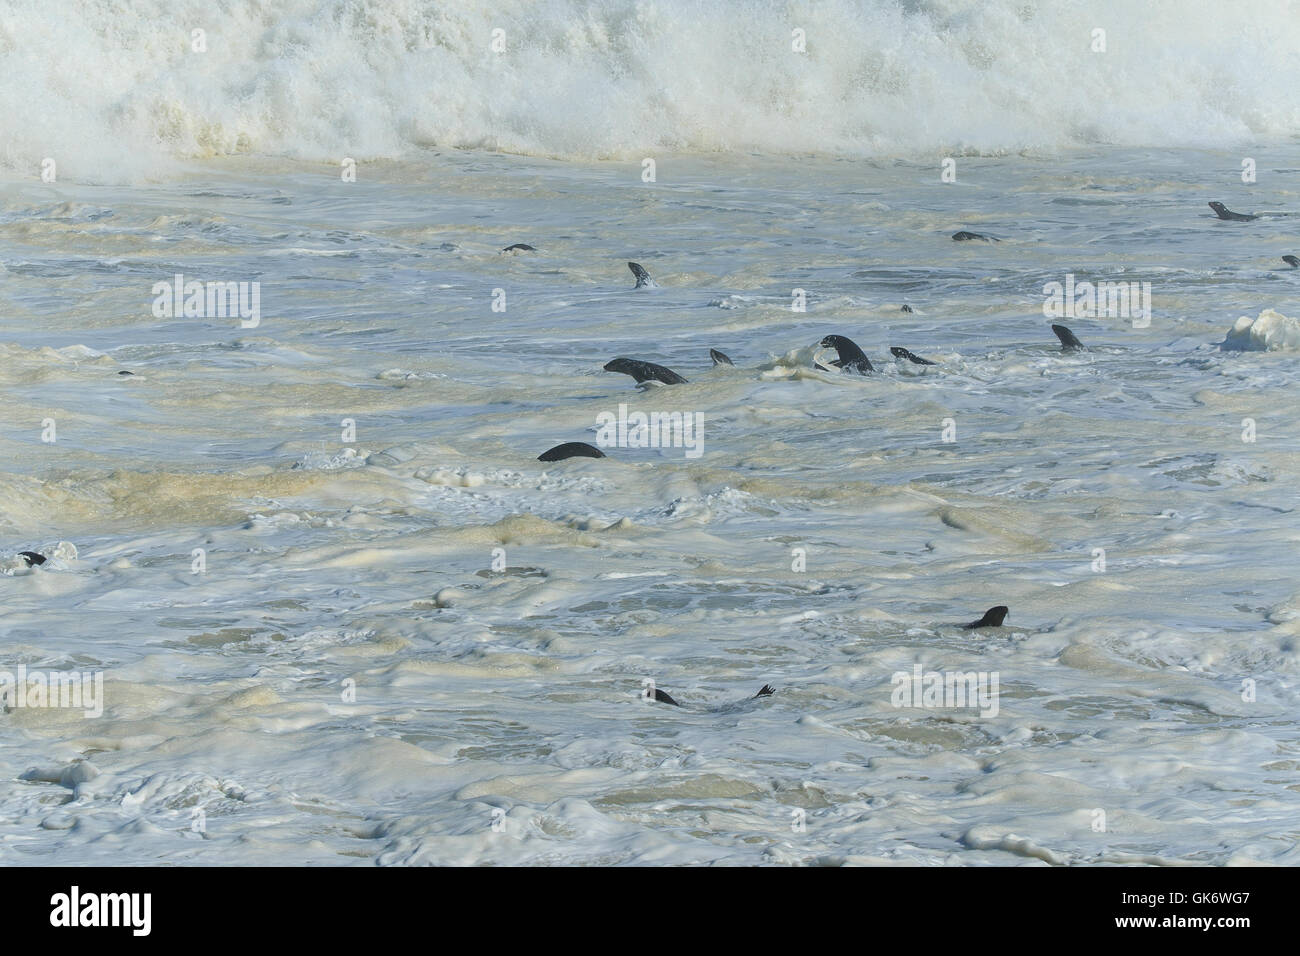 Cape fur seals swimming in ocean waves at Cape cross. Atlantic ocean Namibia Africa. Stock Photo